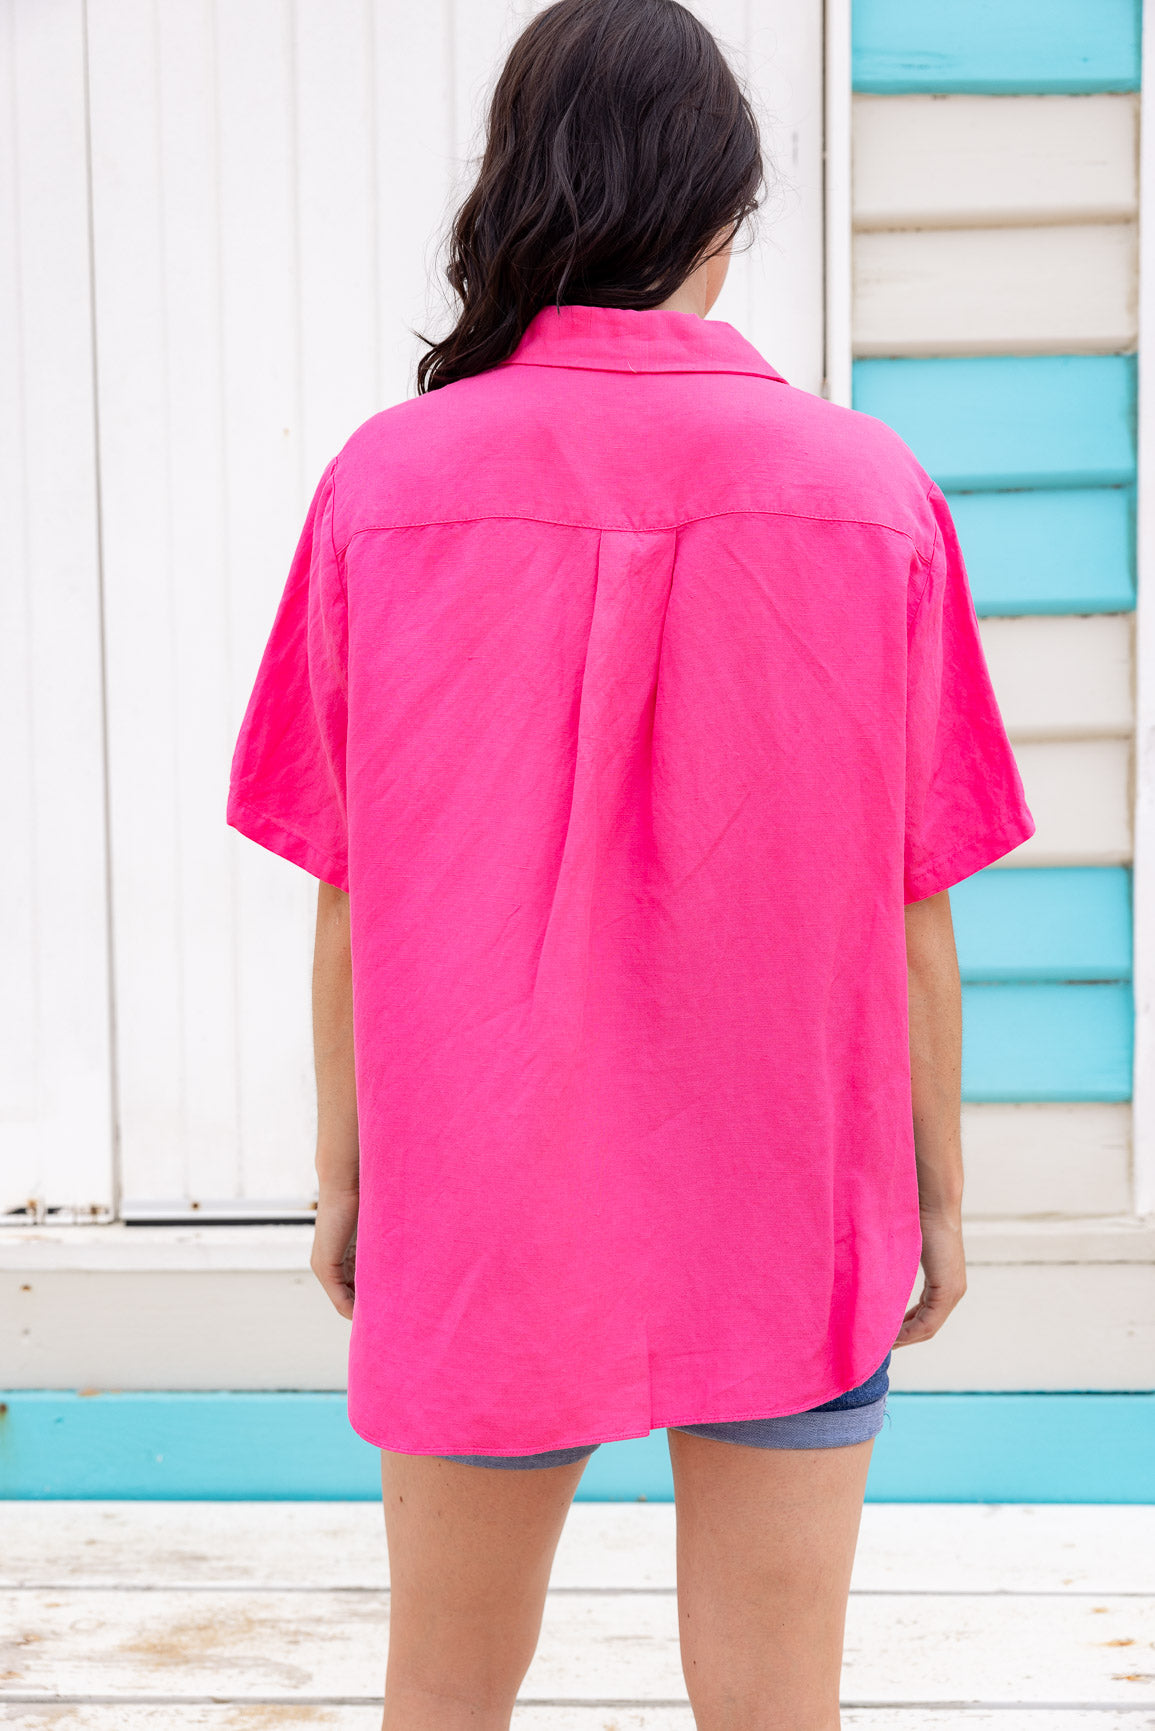 Samara Linen Blend Shirt in Pina Colada